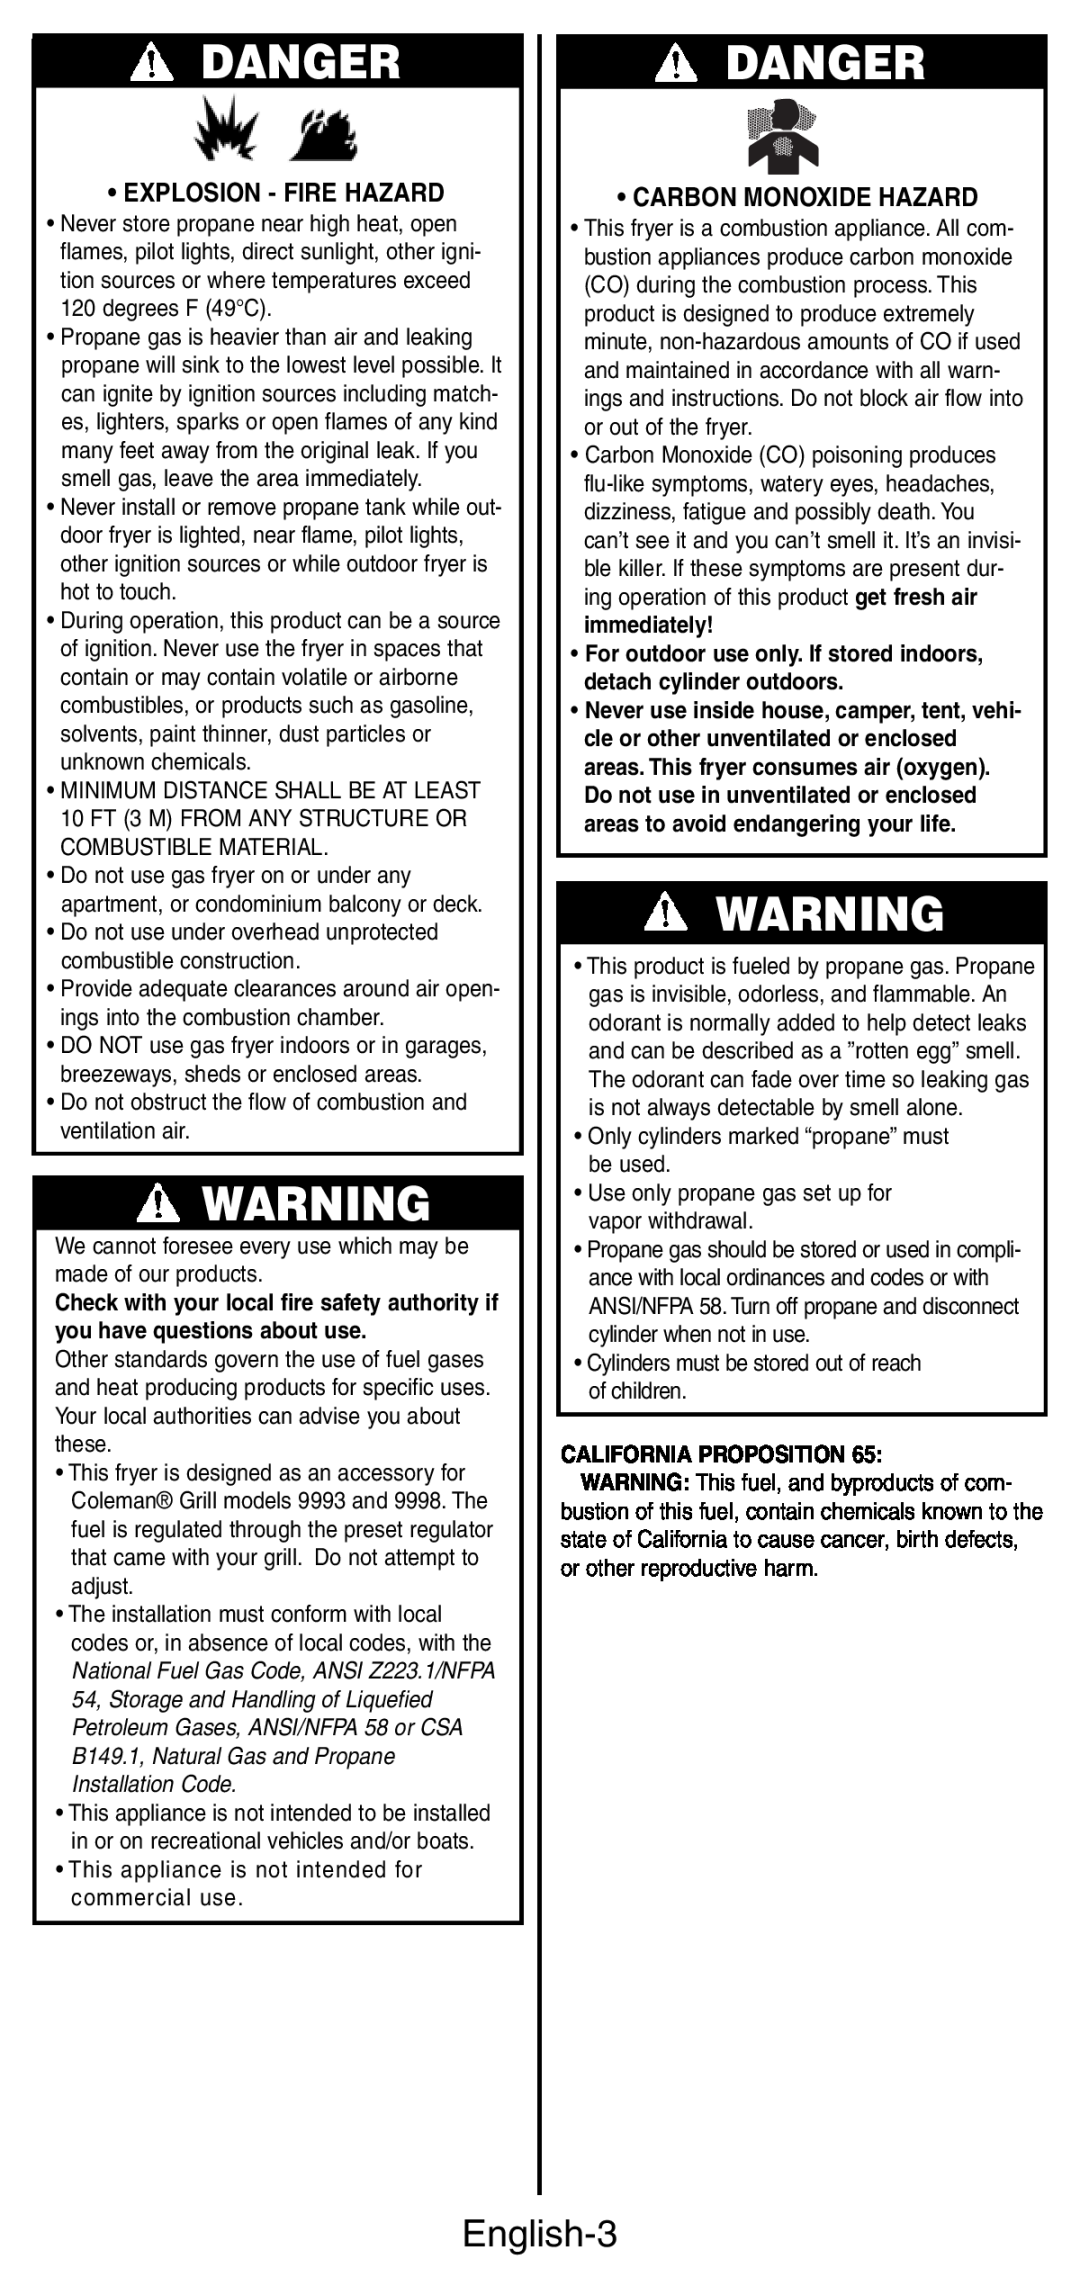 Coleman 9994 instruction manual Danger, English-3, Explosion - Fire Hazard, Carbon Monoxide Hazard, California Proposition 